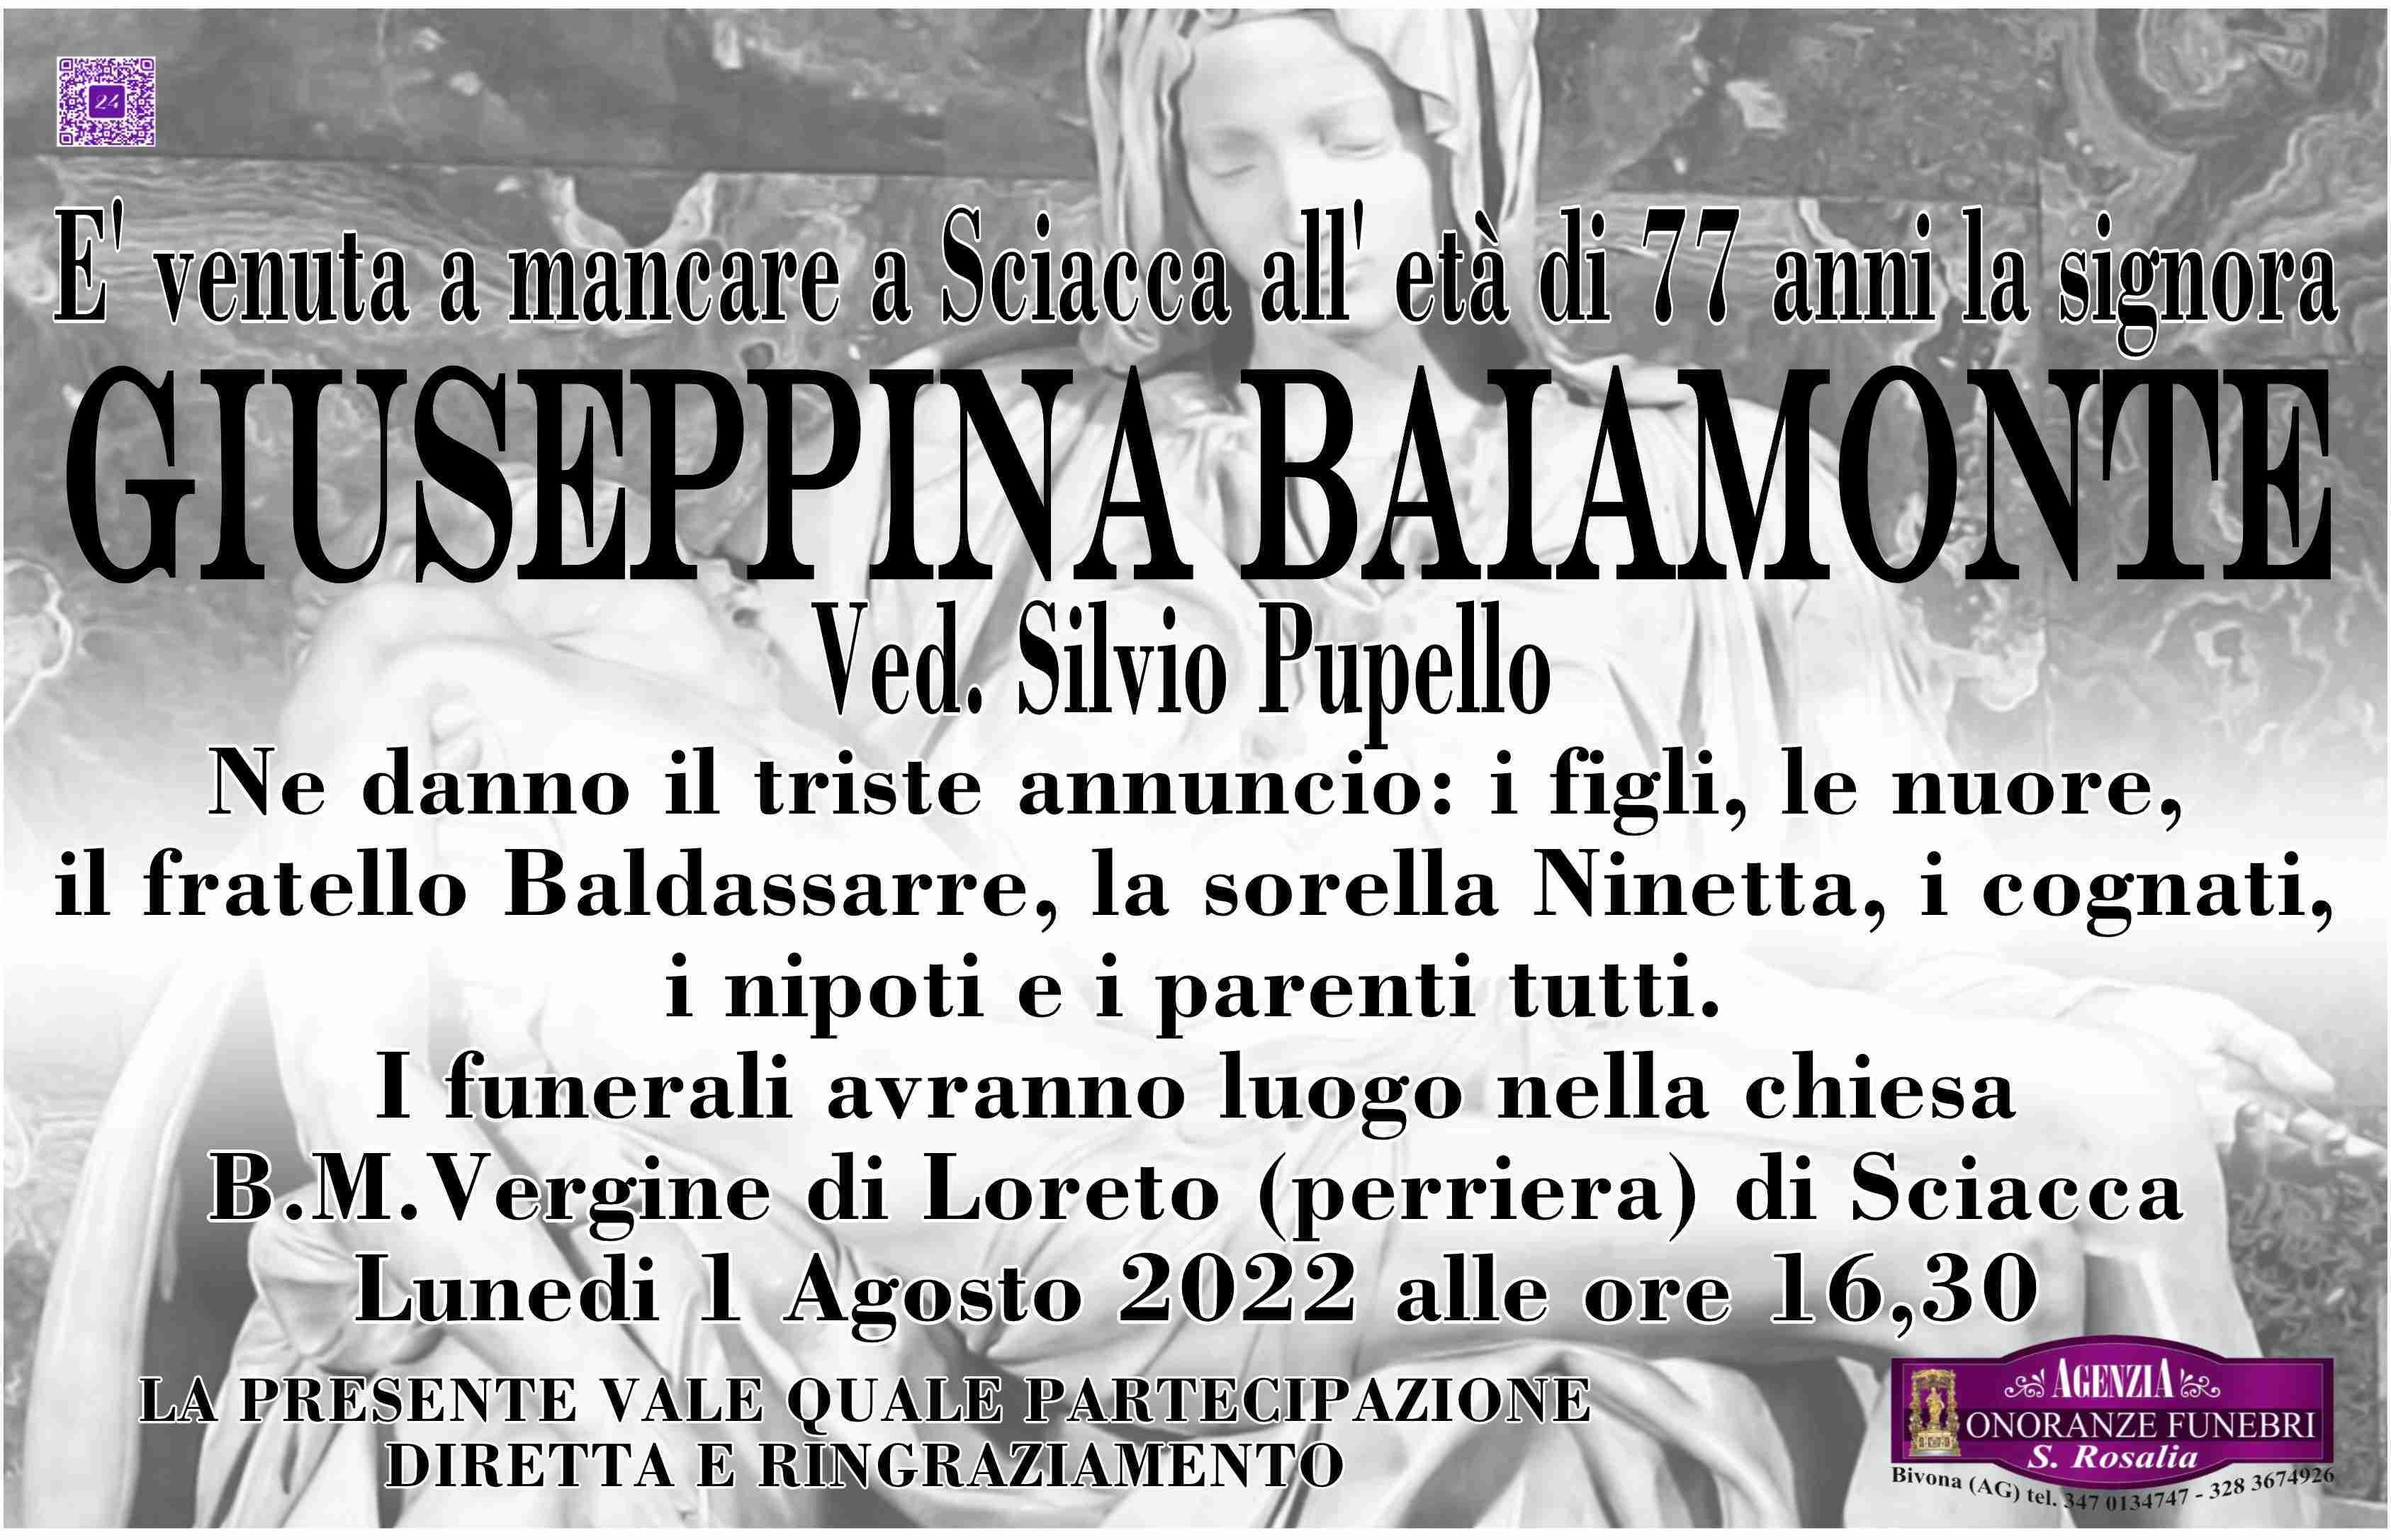 Giuseppina Baiamonte